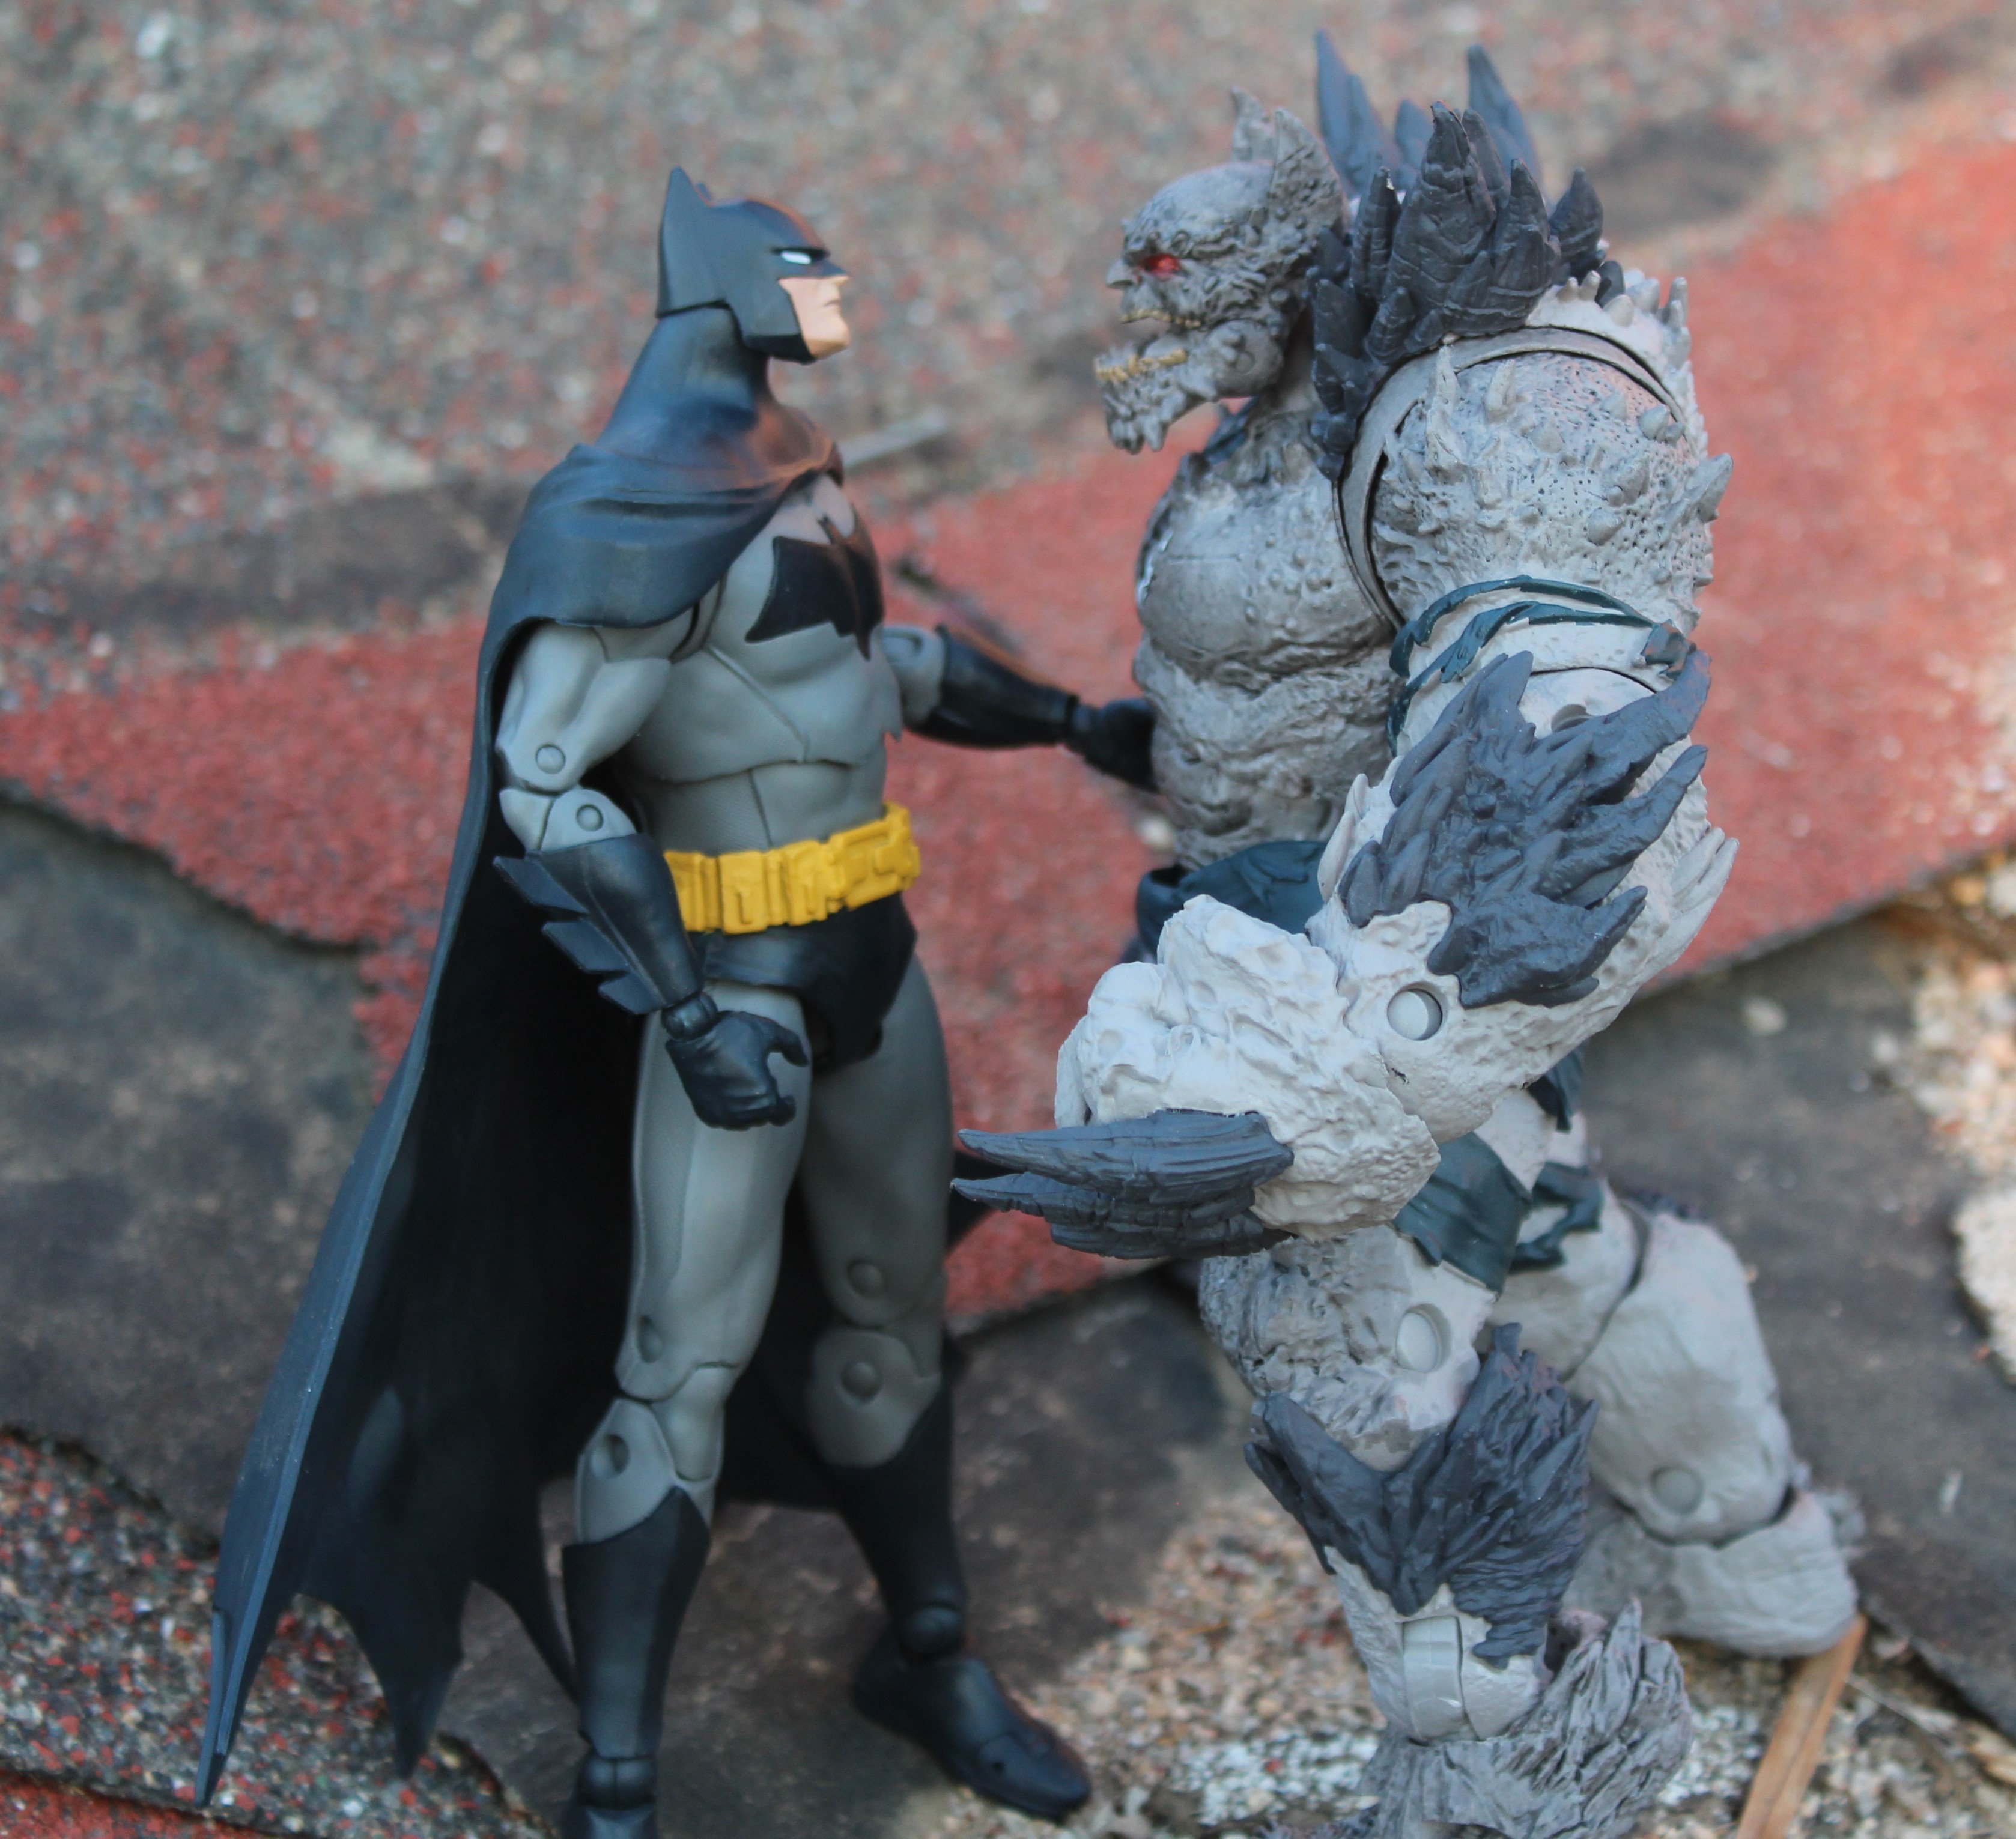 Batman vs. Devastator